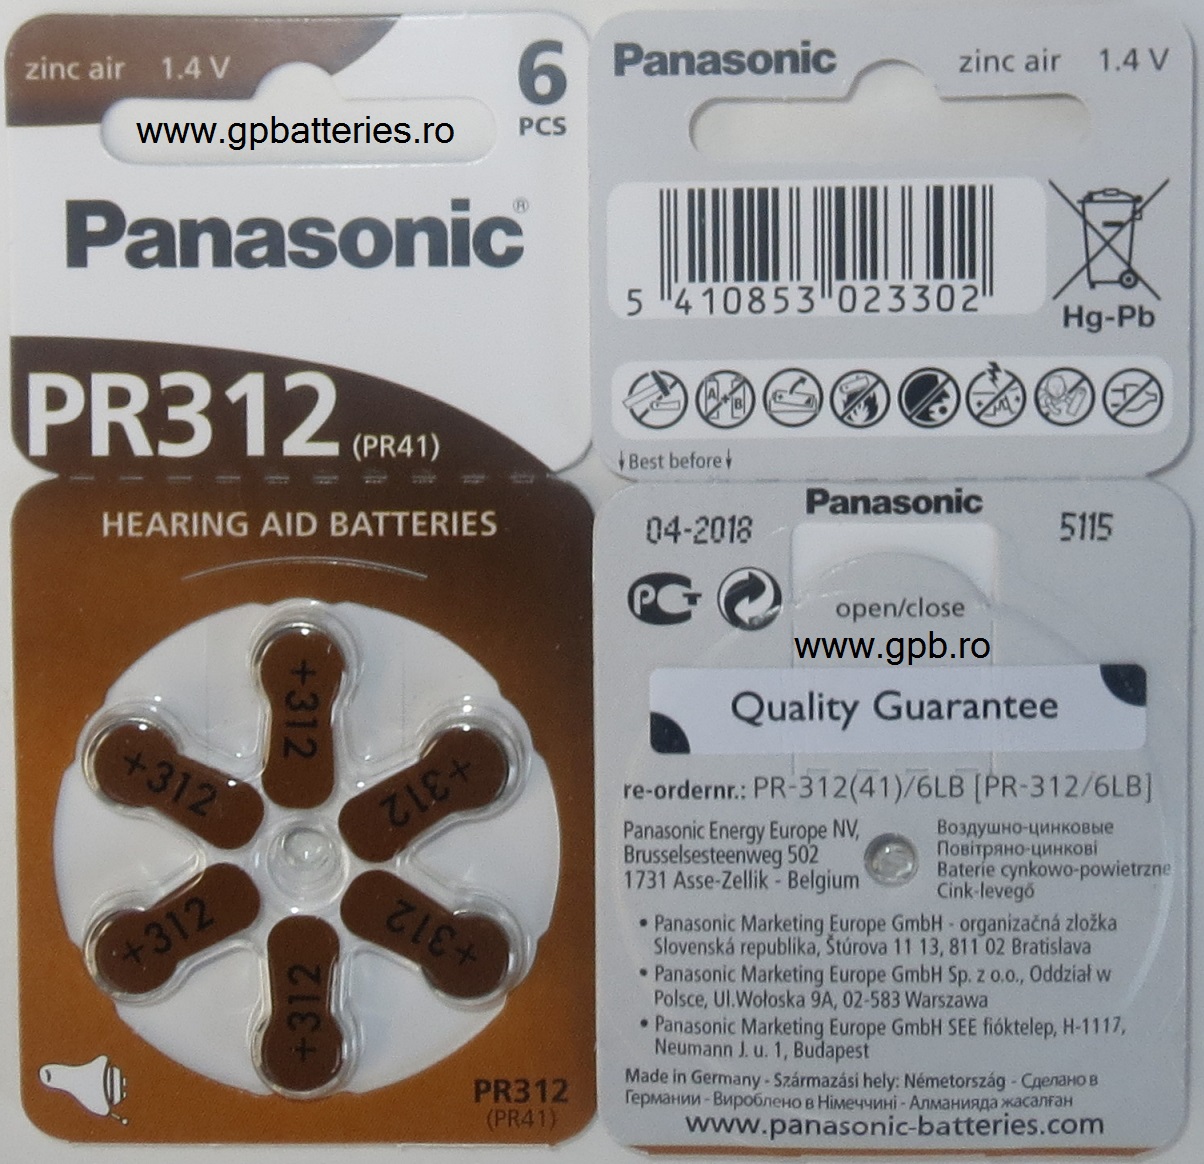 Panasonic baterie zinc-aer ZA312